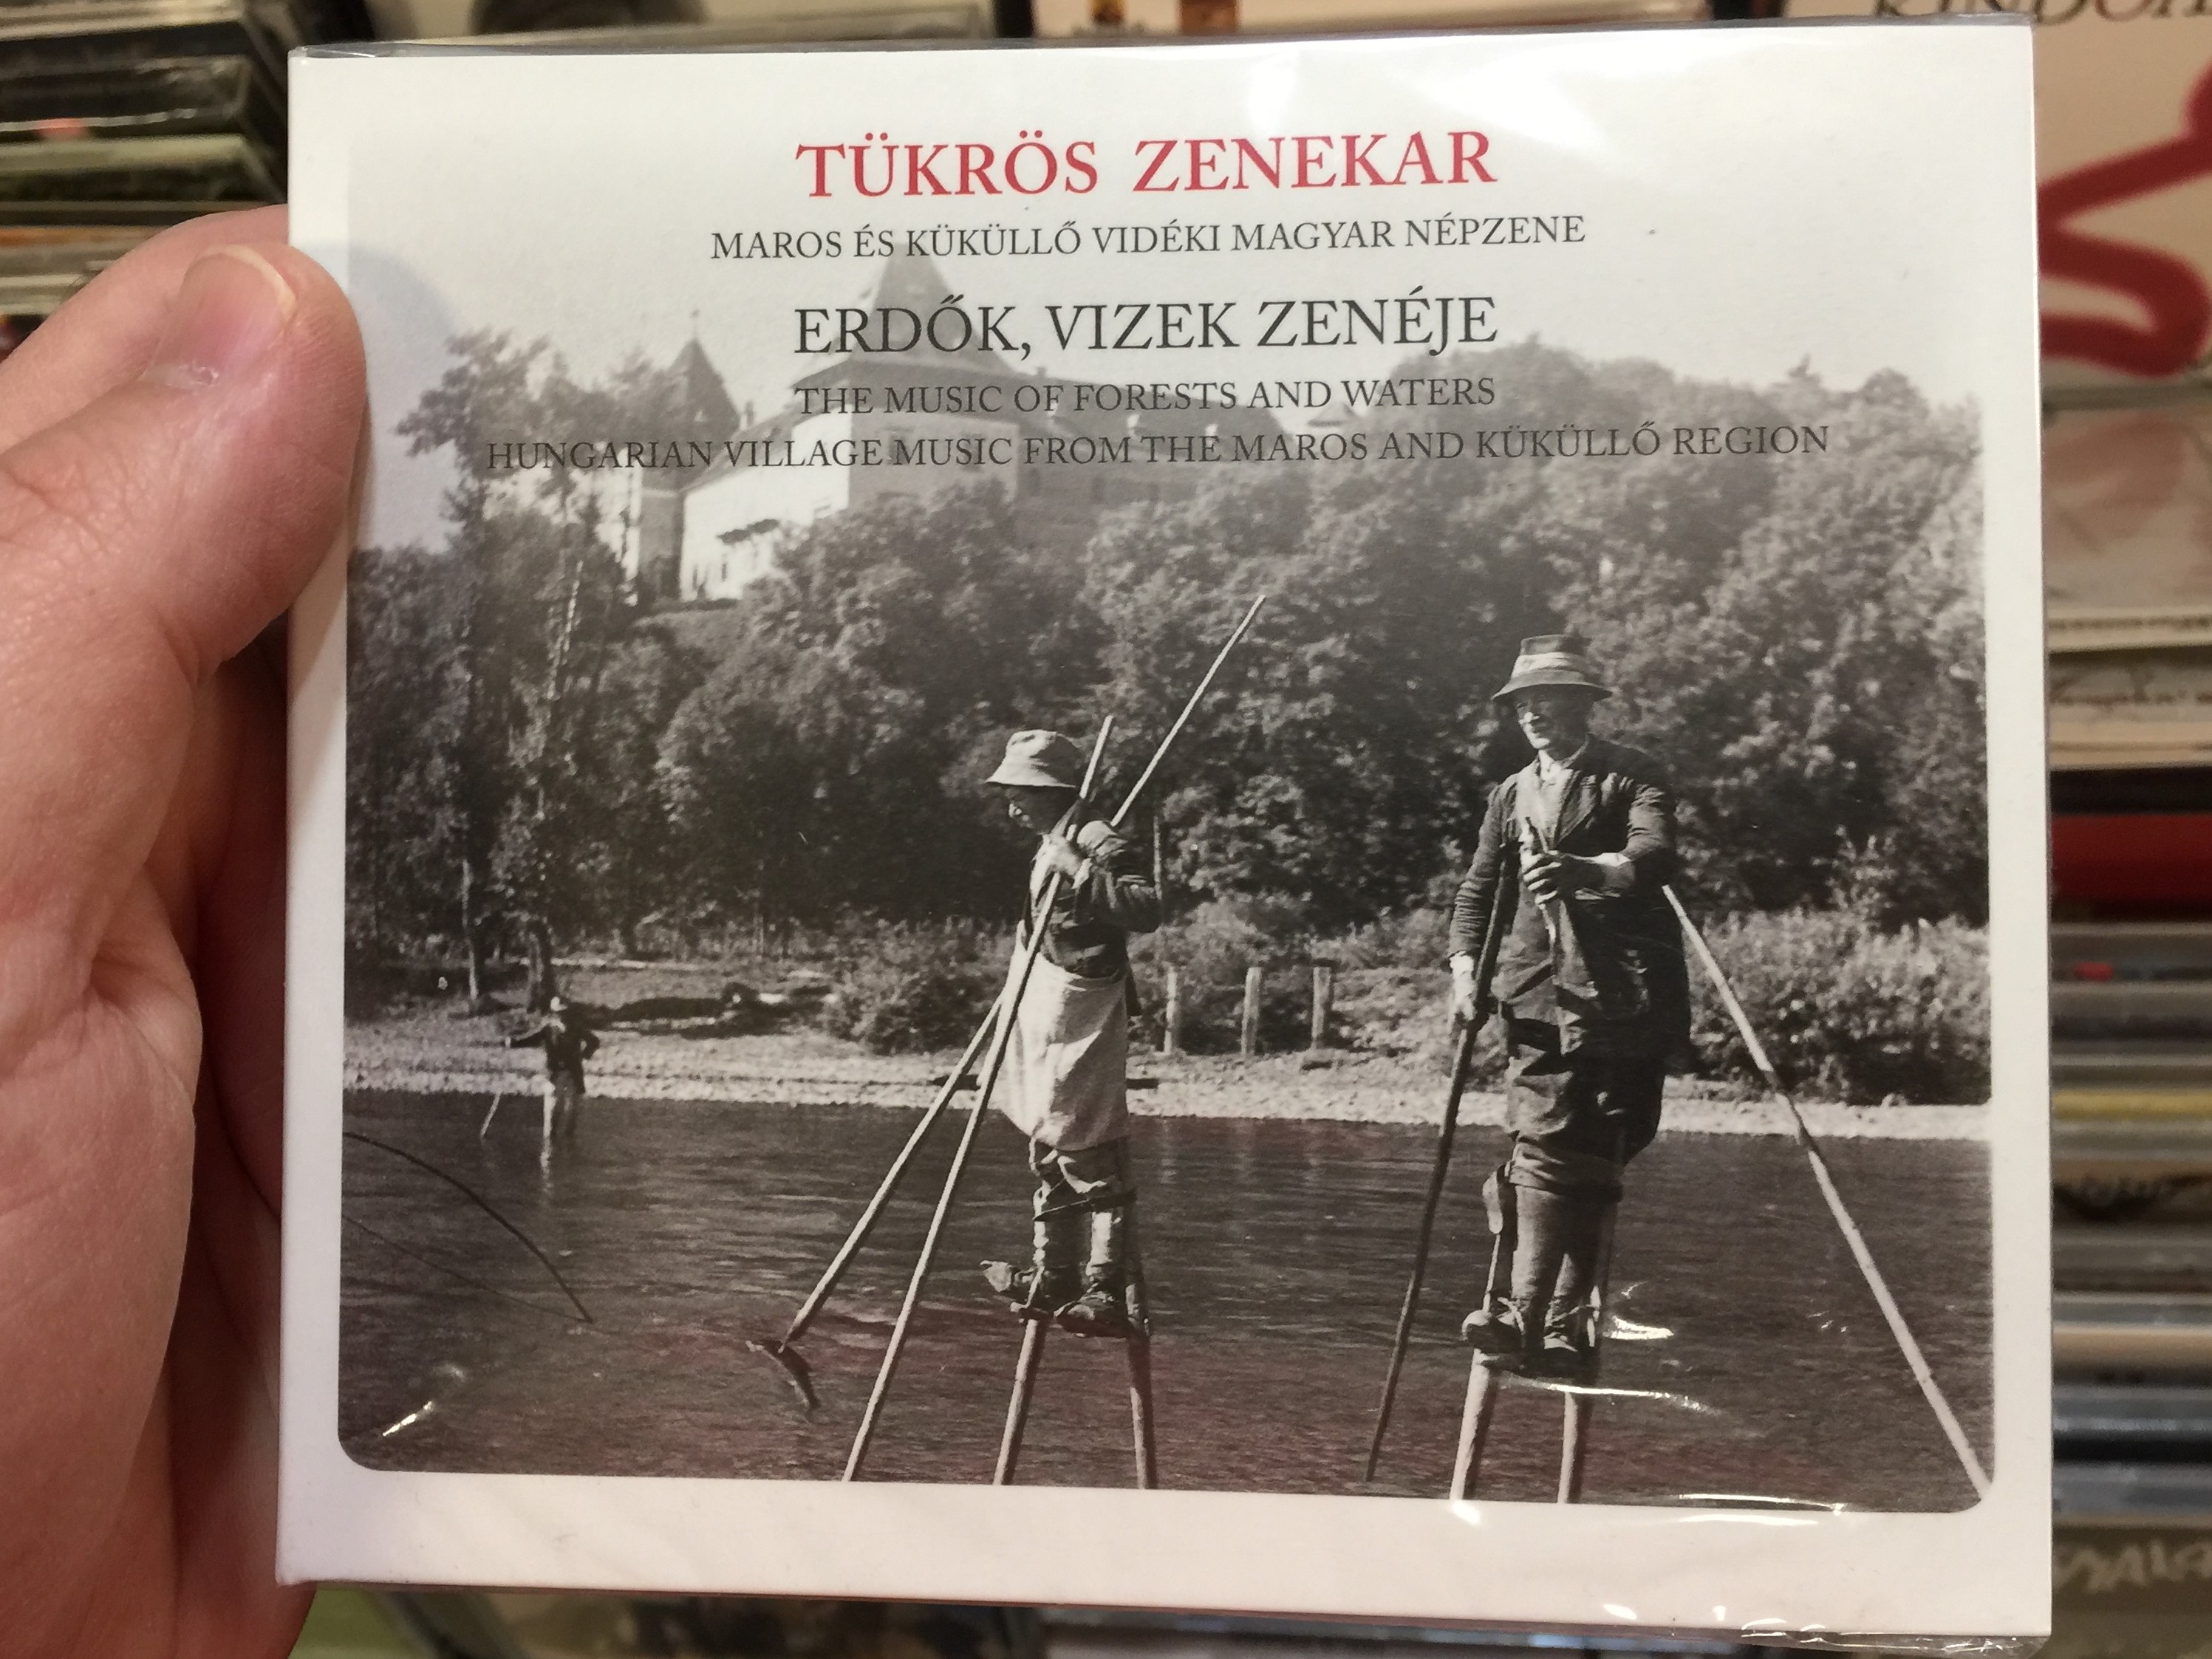 t-kr-s-zenekar-erd-k-vizek-zen-je-maros-es-kukullo-videki-magyar-nepzene-the-music-of-forests-and-waters-hungarian-village-music-from-the-maros-and-kukullo-region-folk-eur-pa-audio-cd-201-1-.jpg